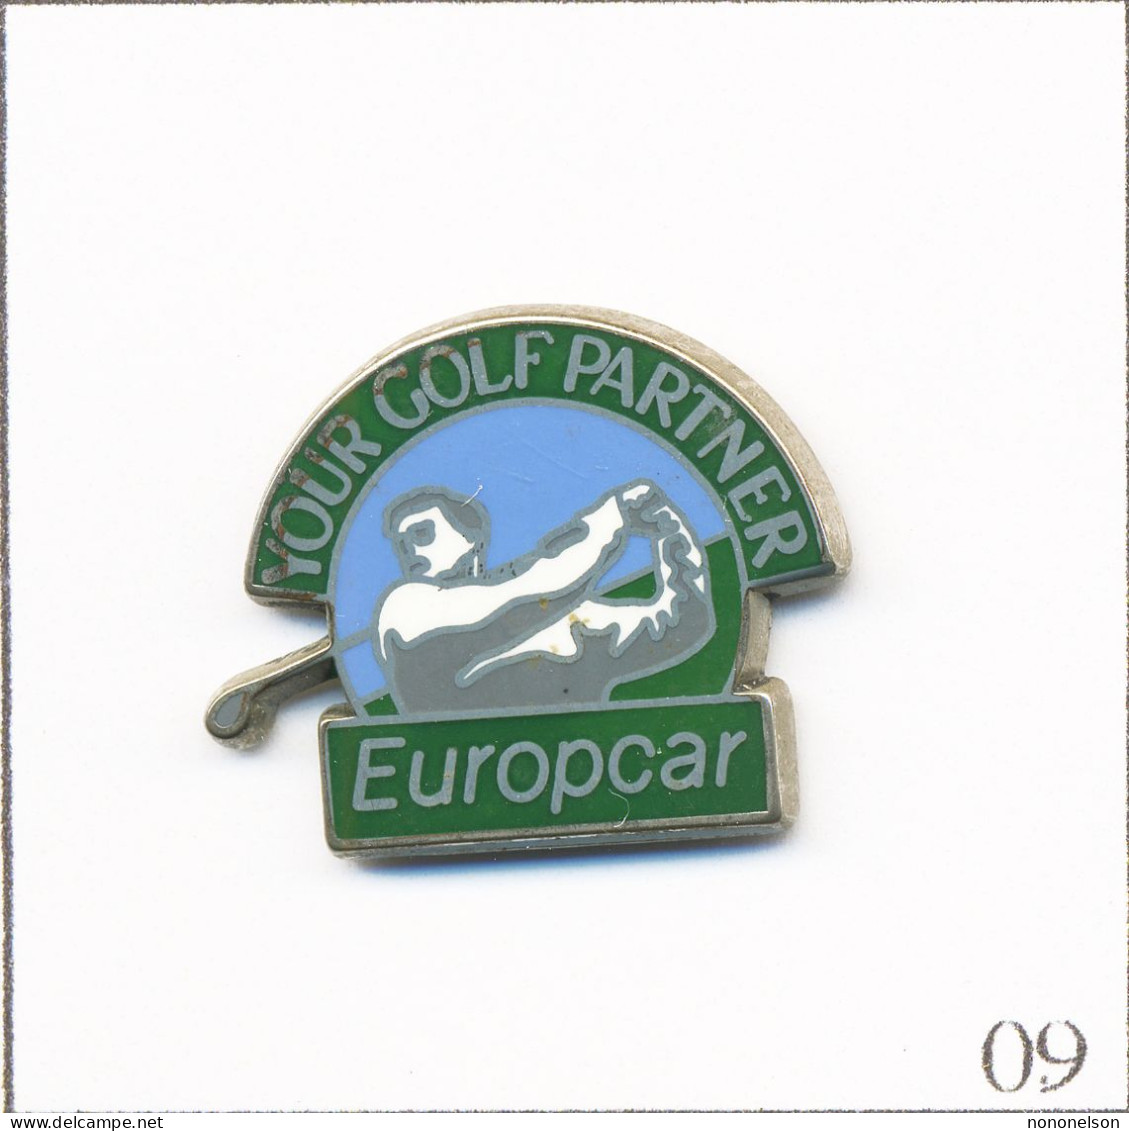 Pin's Sport - Golf / Sponsor Europcar “Your Golf Partner“. Non Estampillé. Zamac Base Chromée. T710-09 - Golf